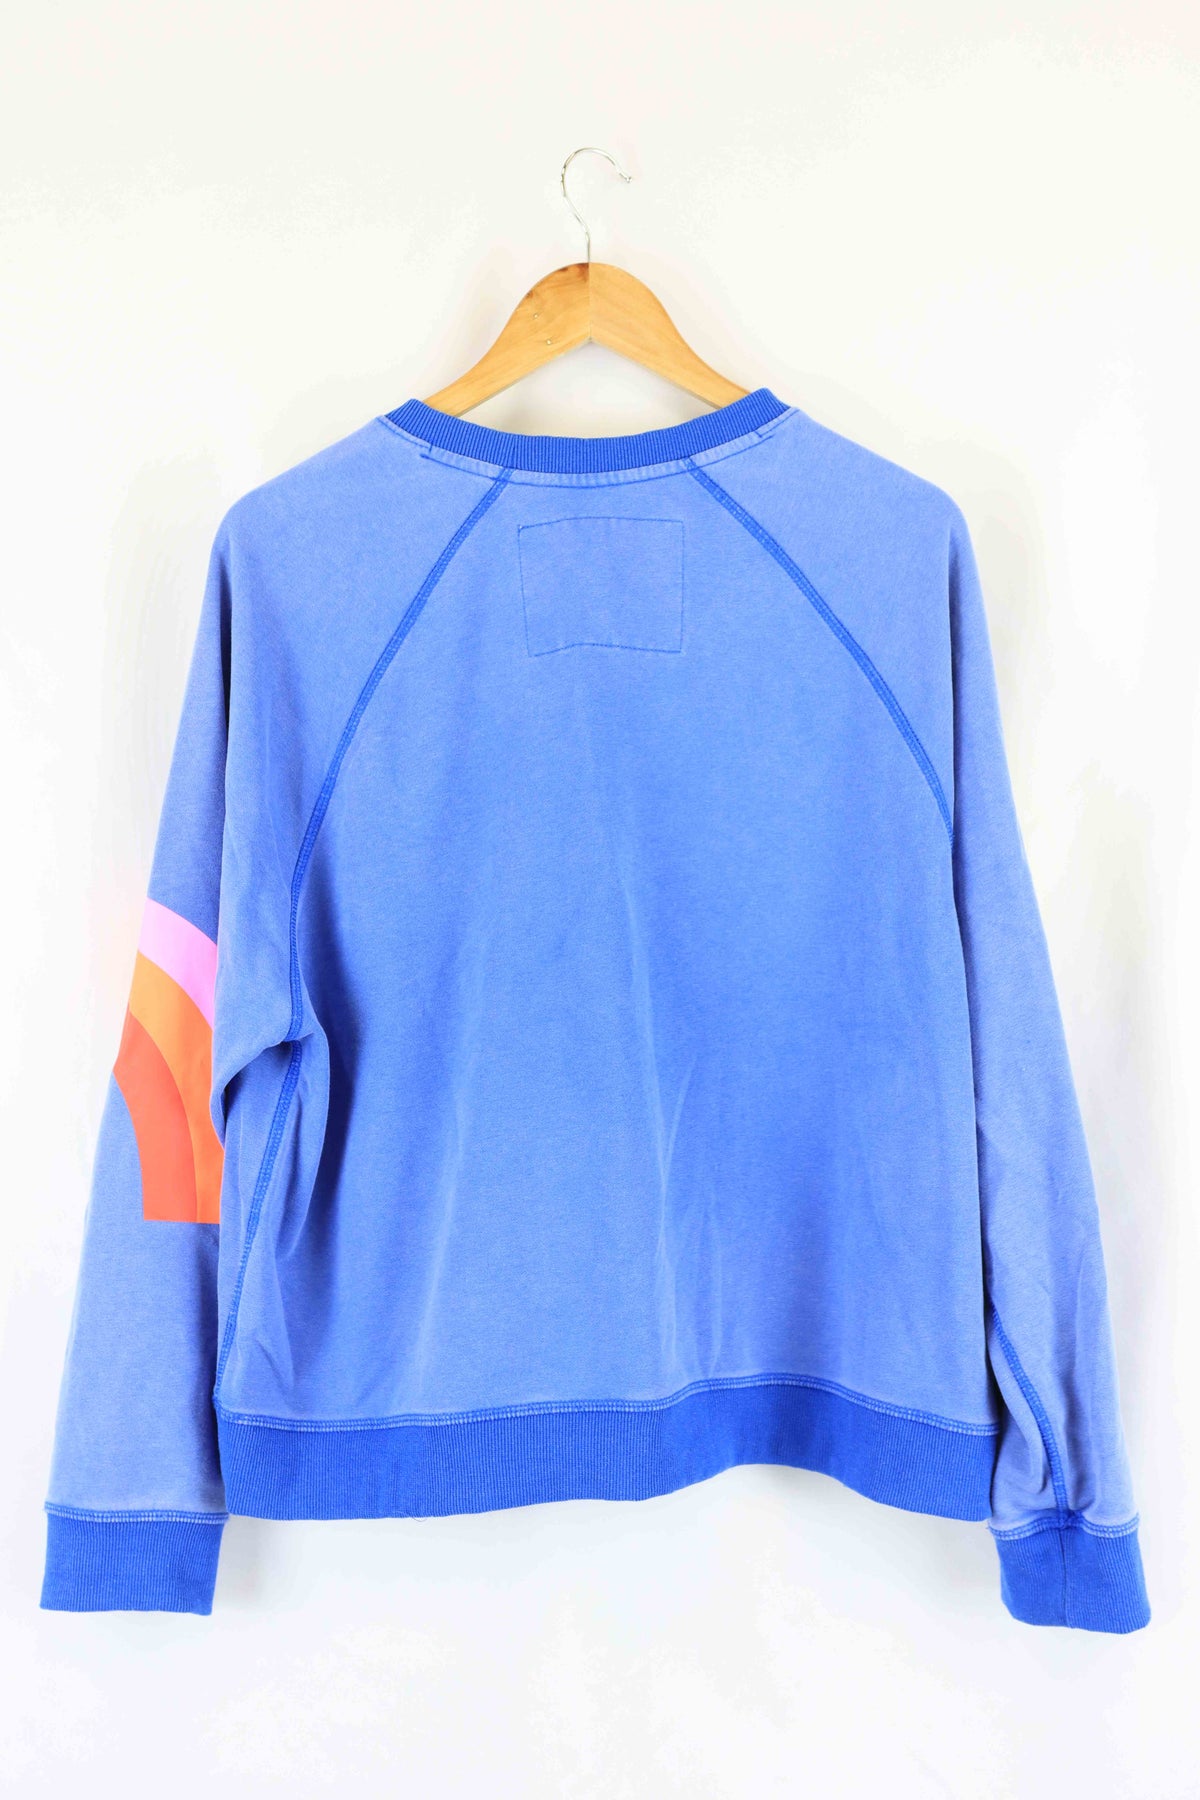 Hammill + CO Blue Sweatshirt S